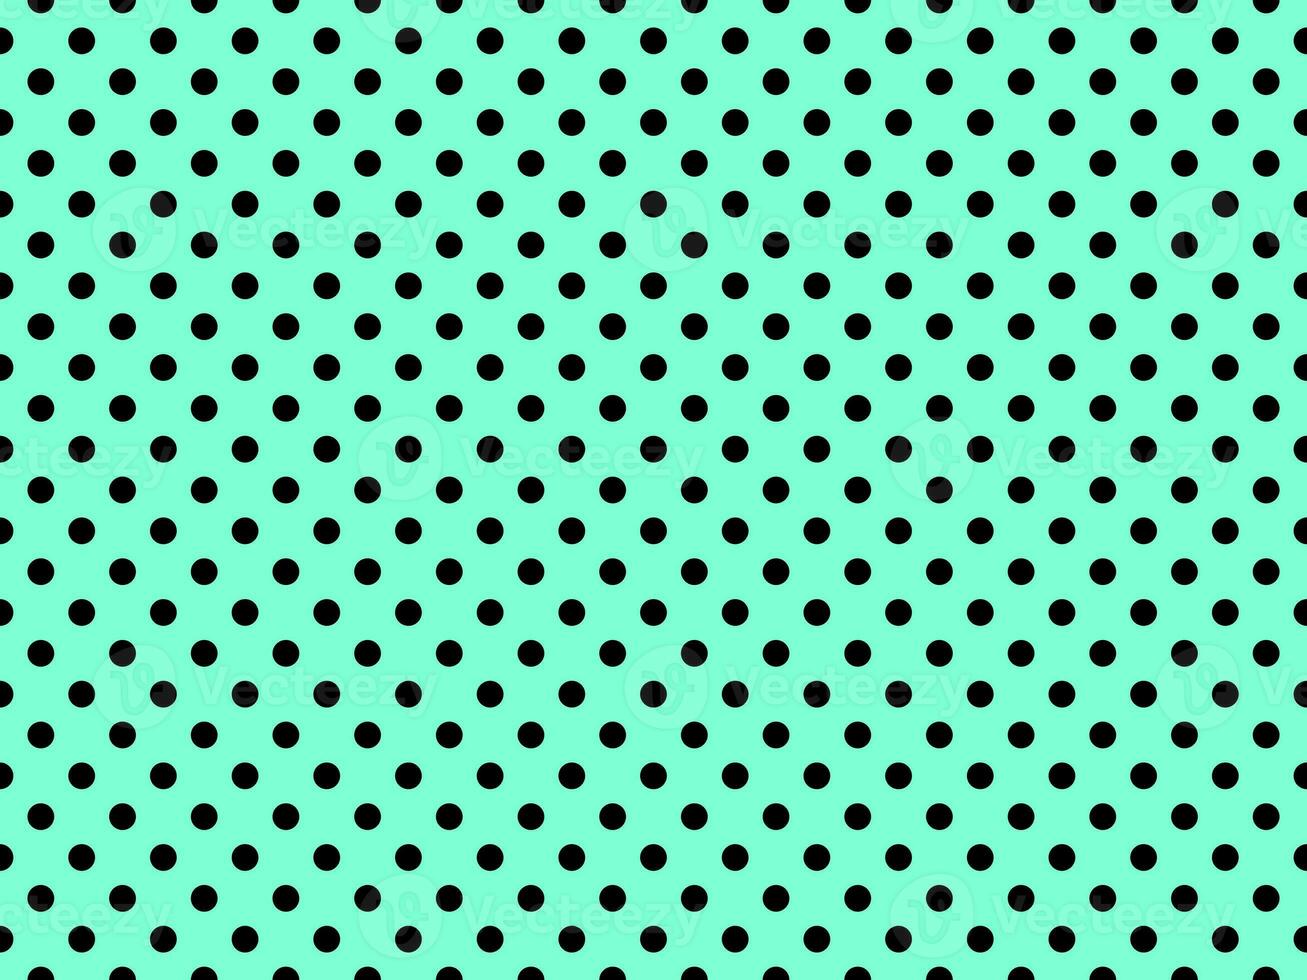 noir polka points plus de bleu vert Contexte photo